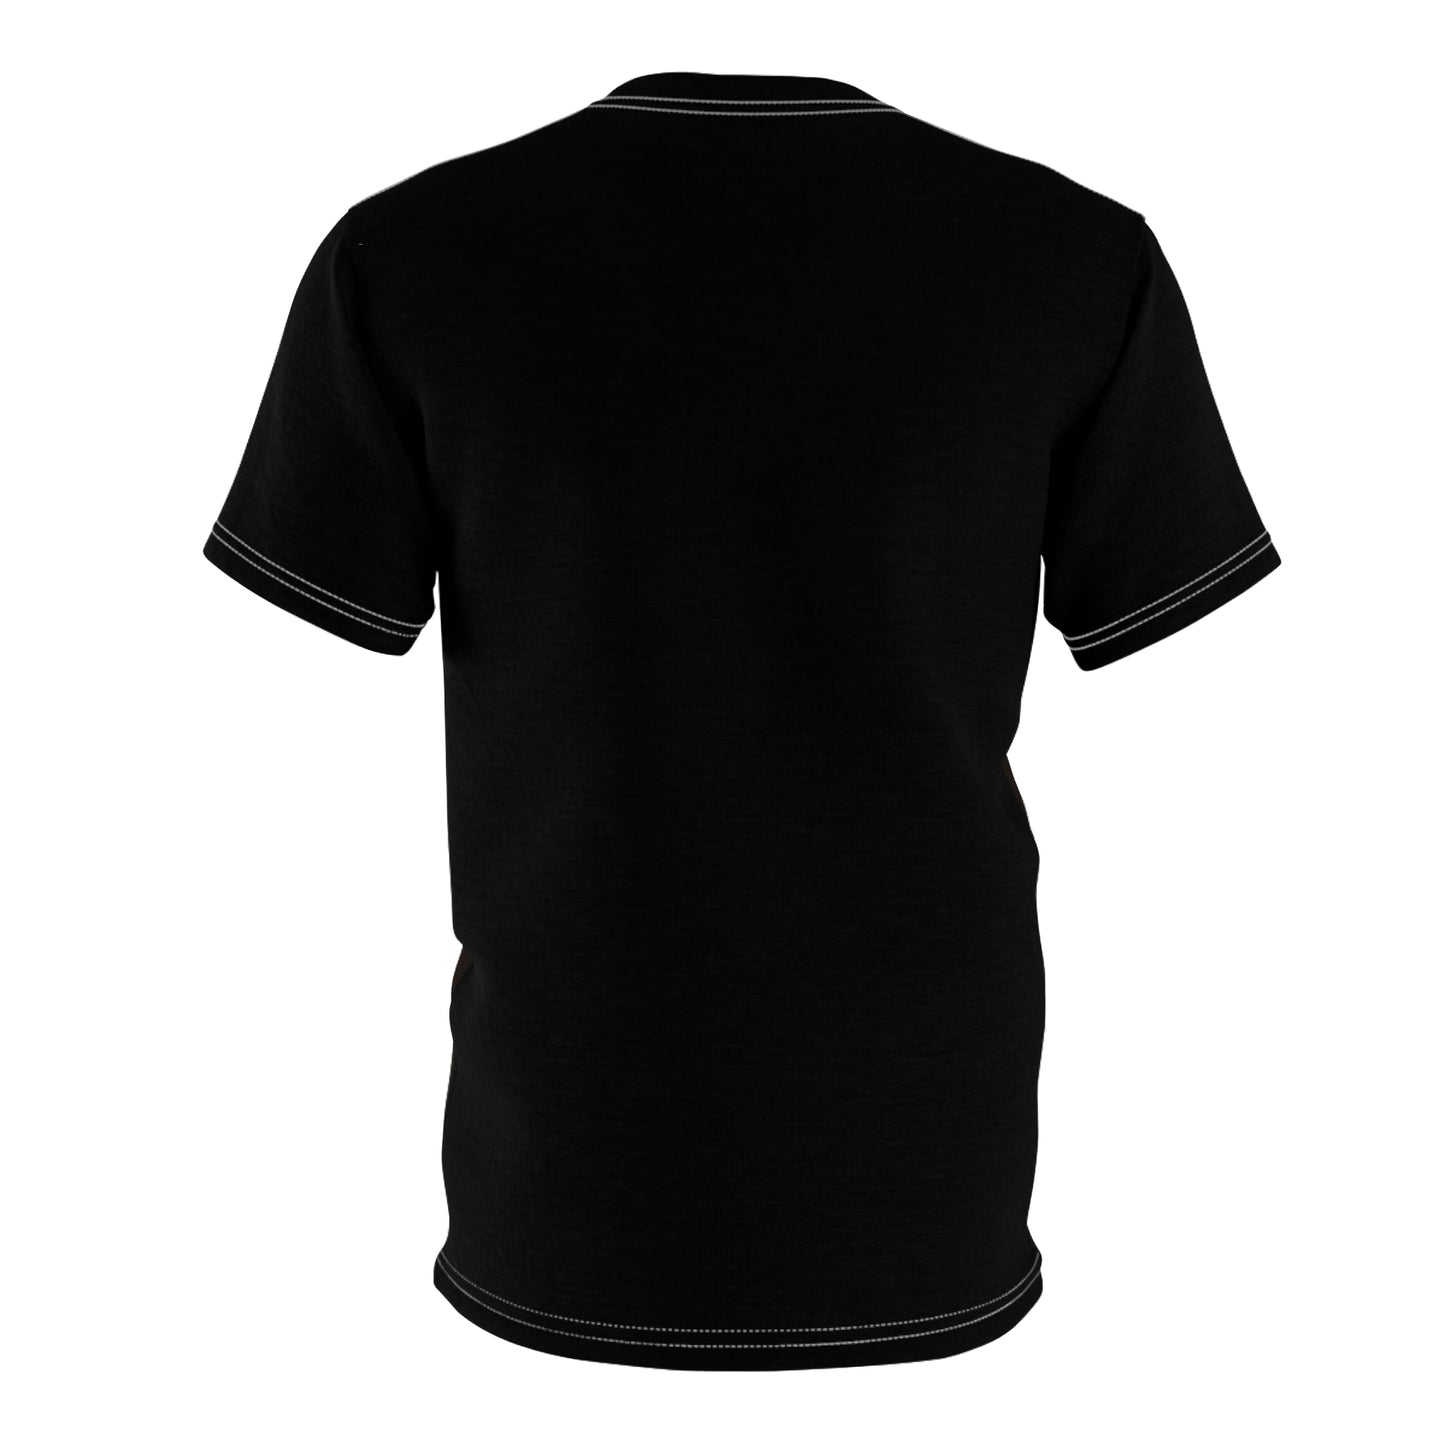 Soul Man - Unisex All-Over Print Cut & Sew T-Shirt